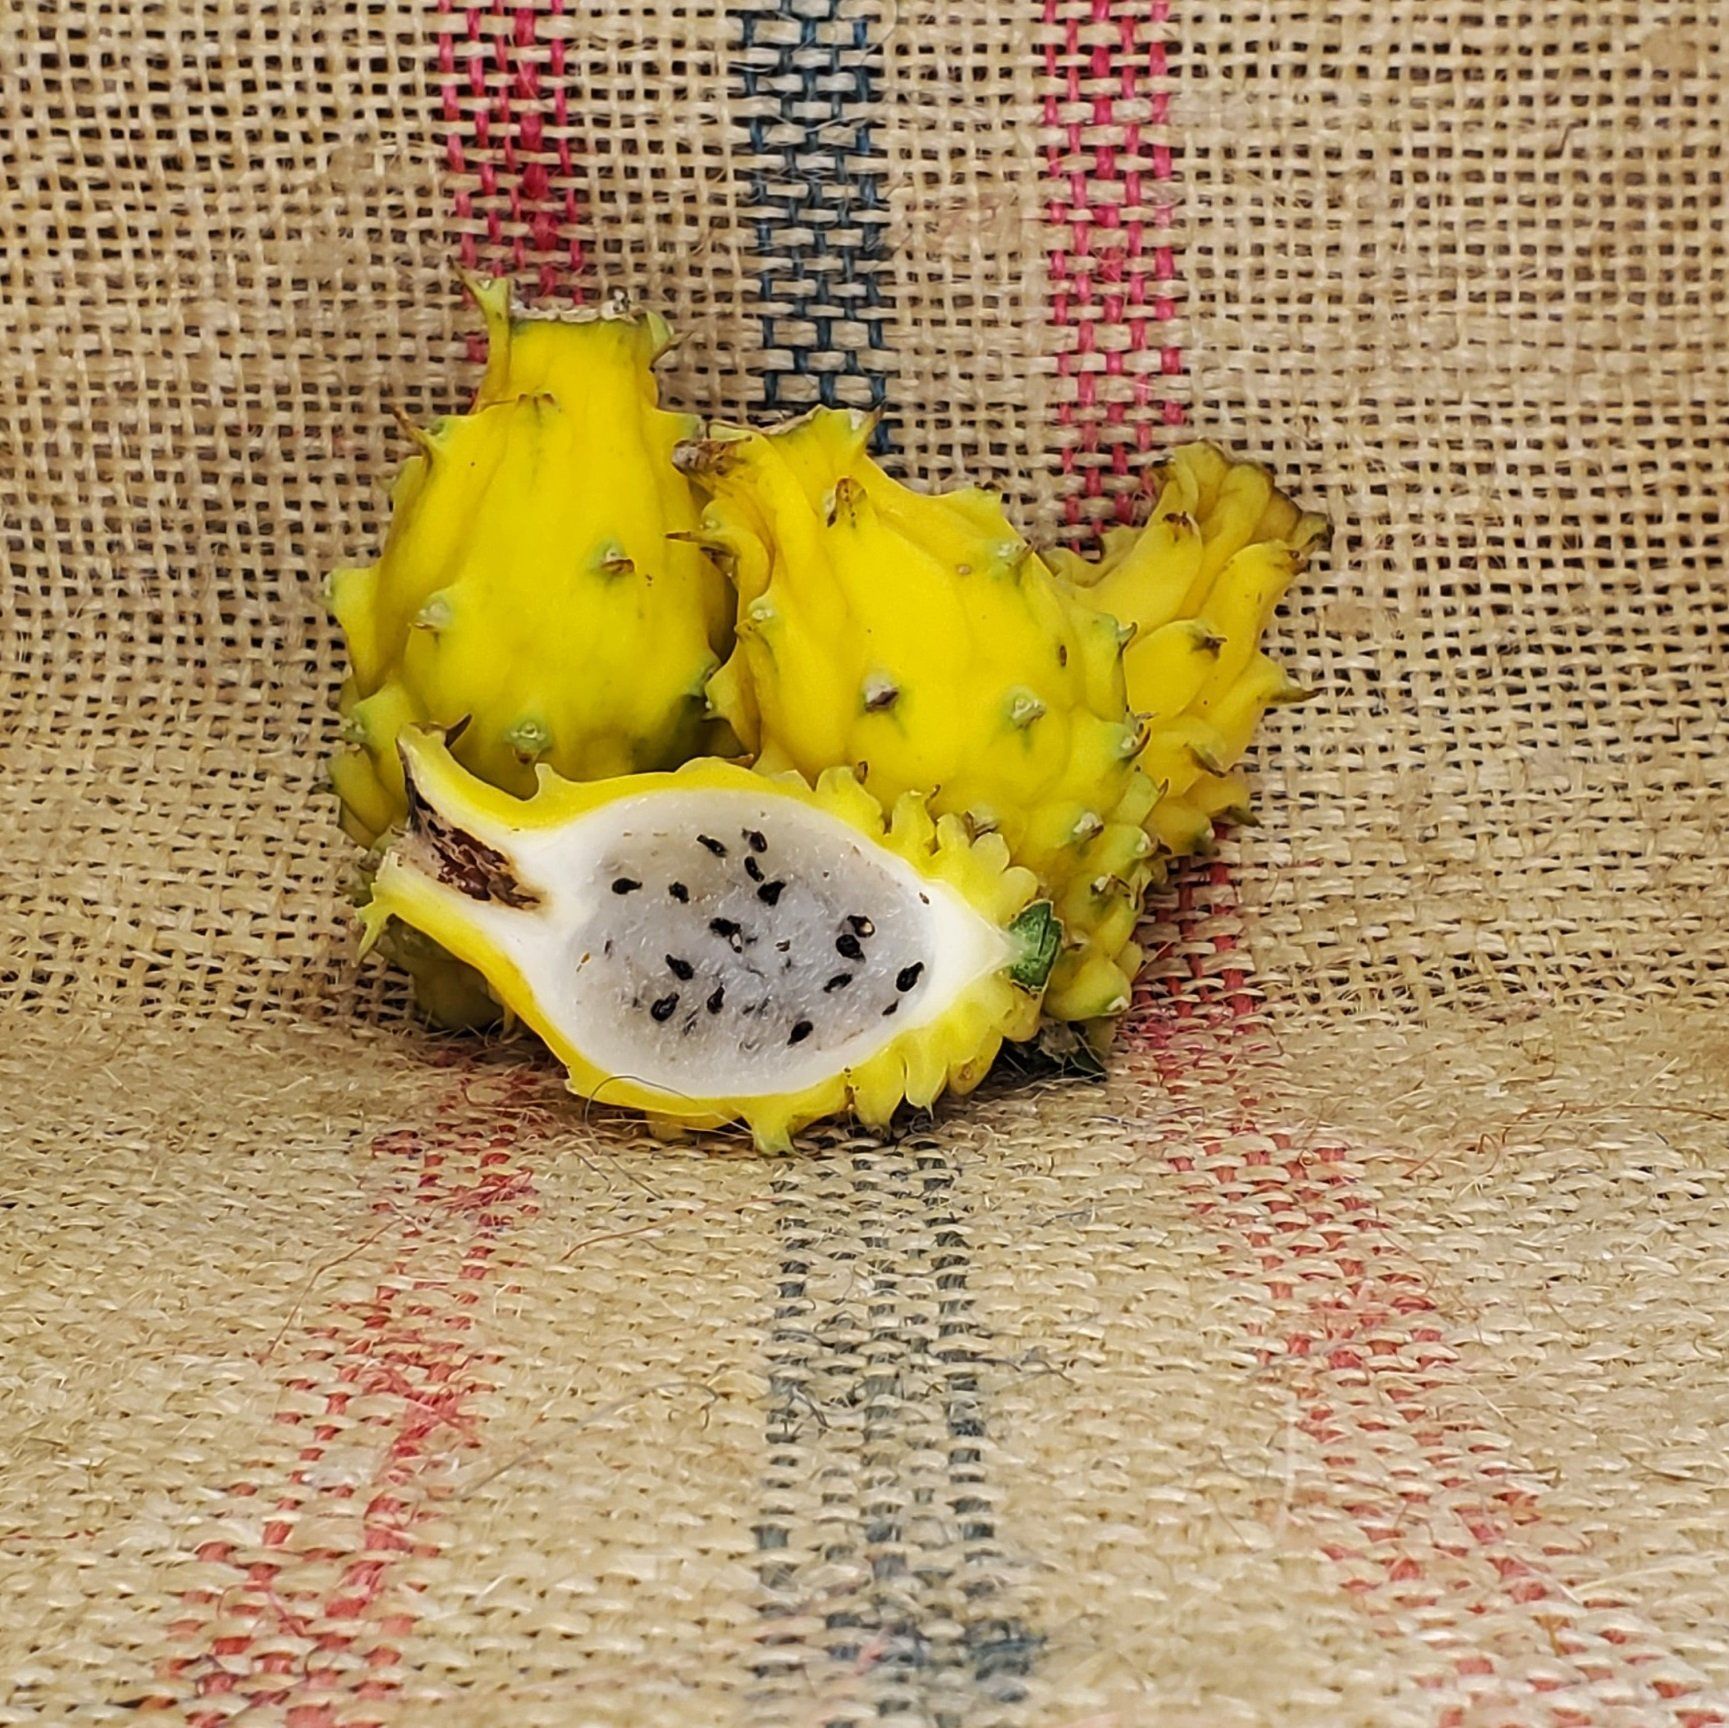 Yellow Dragon dragon fruit cut in half